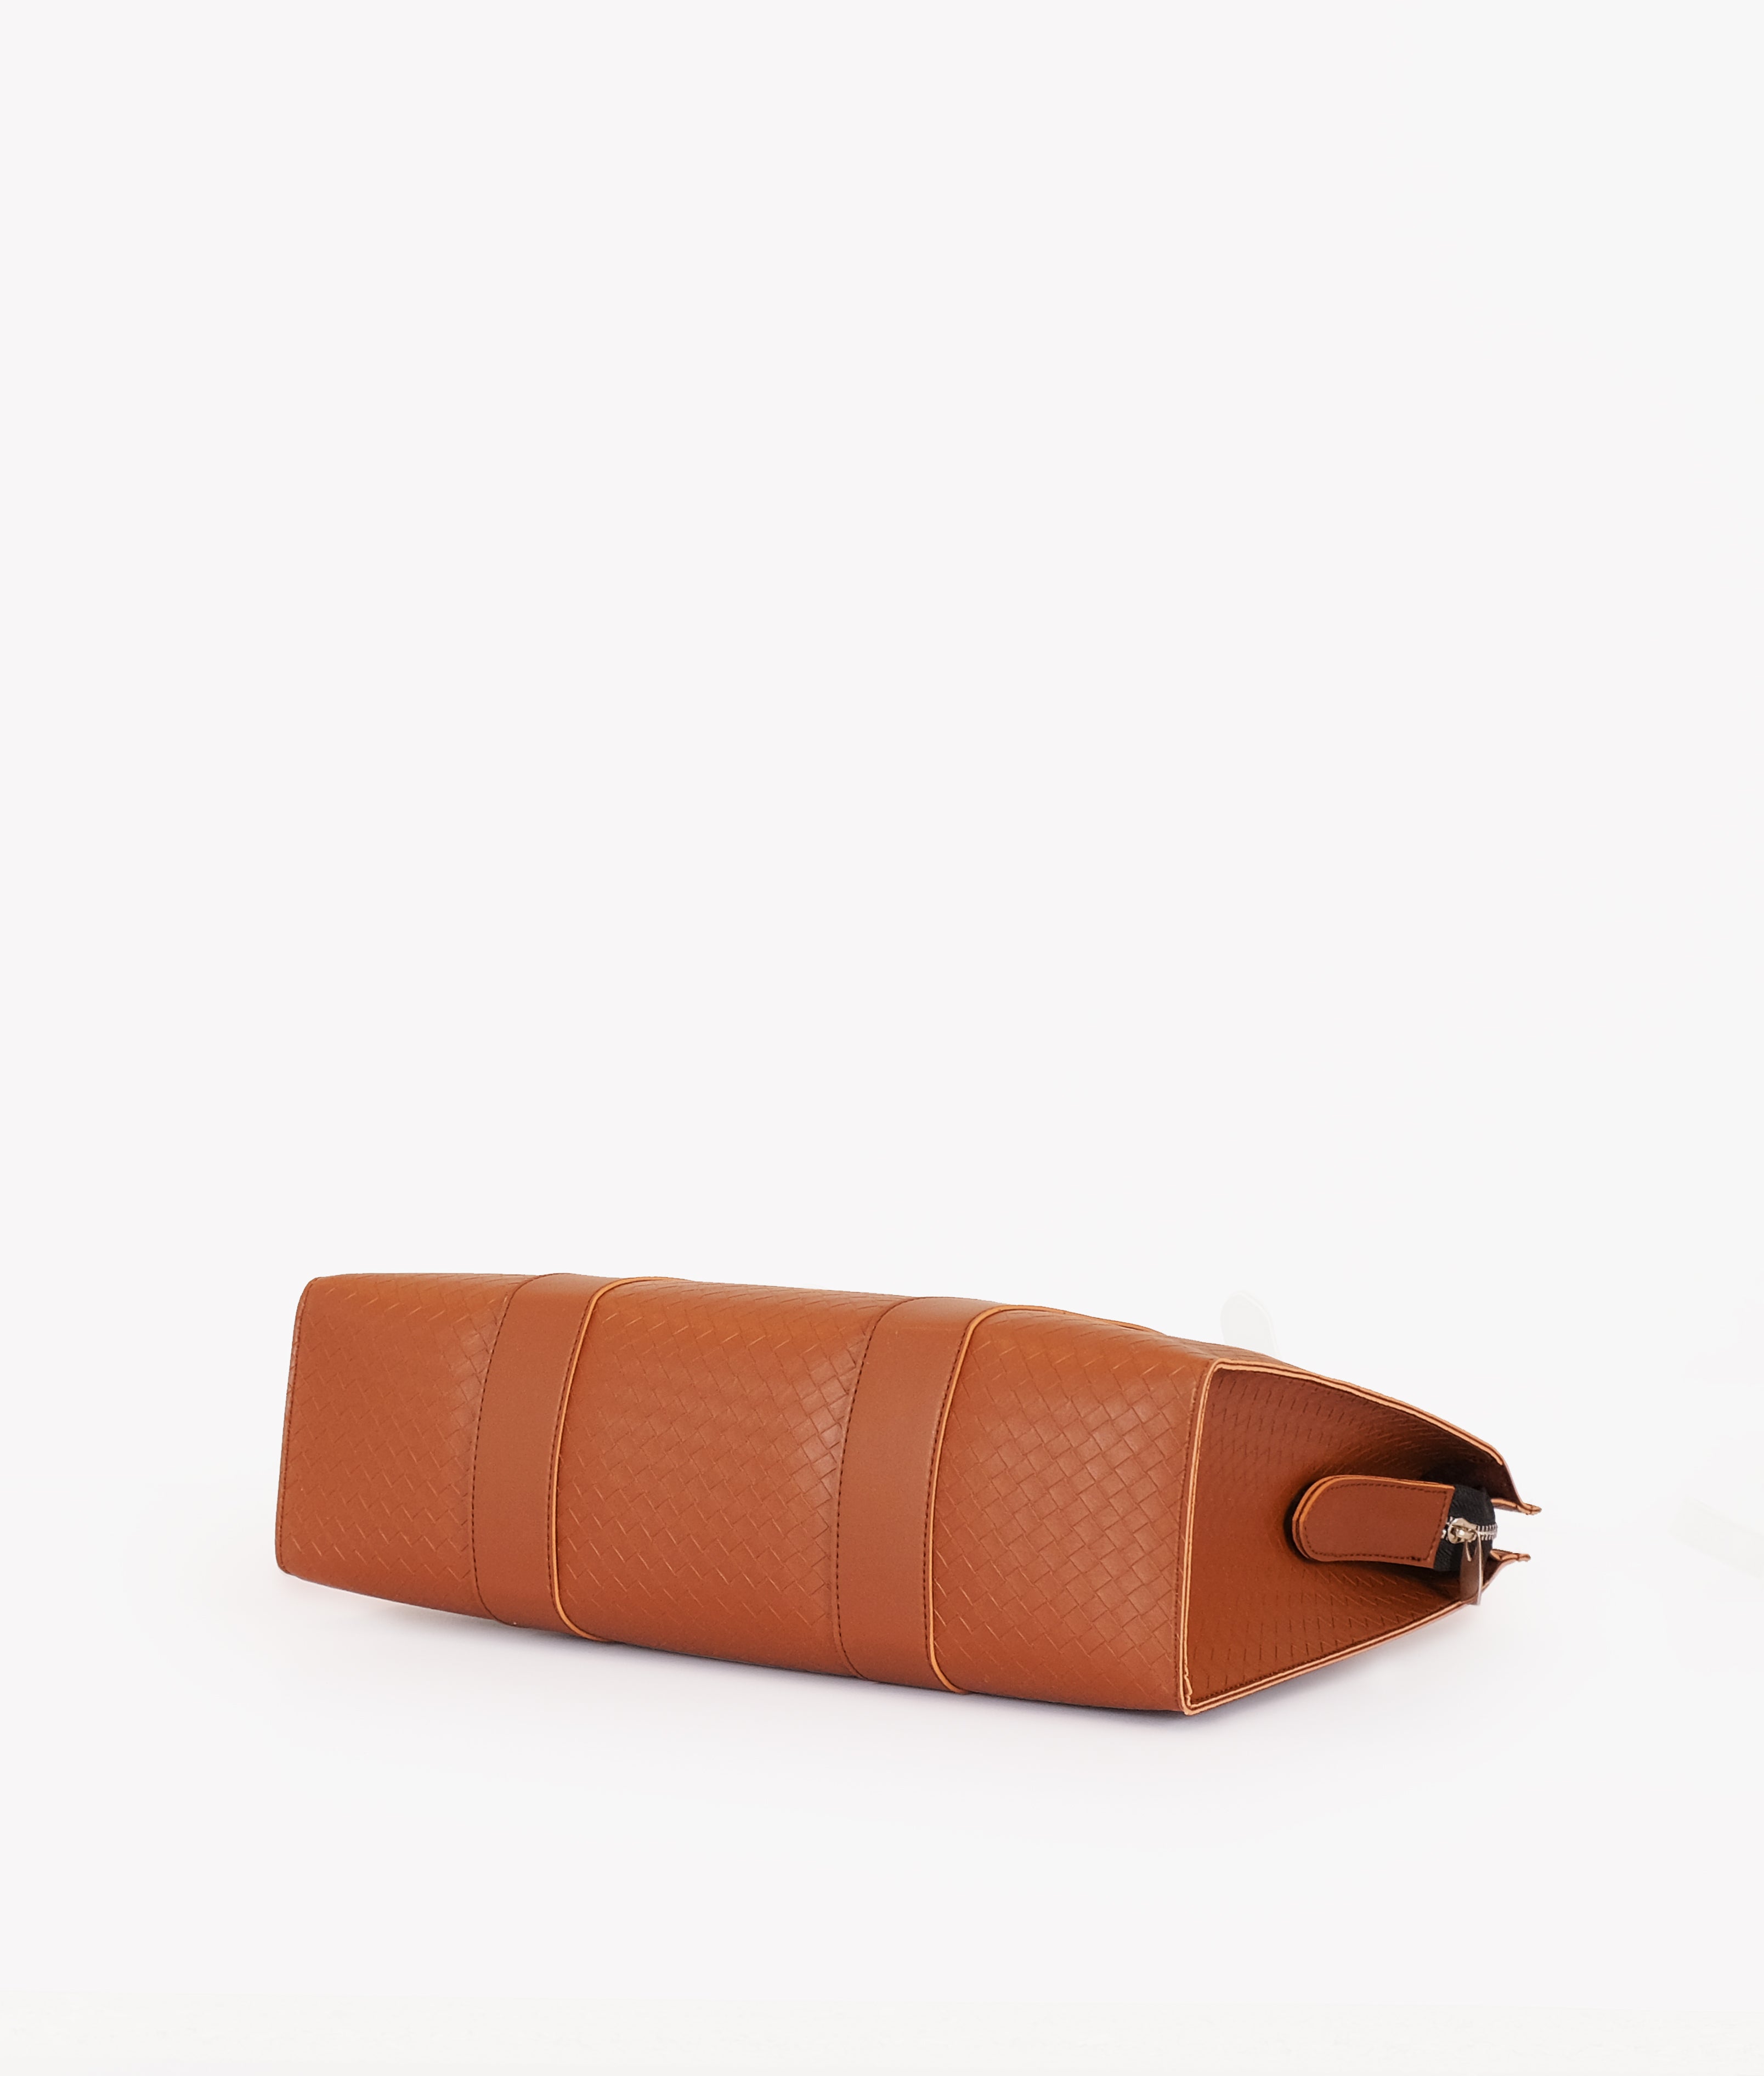 Brown weaved laptop bag with sleeve